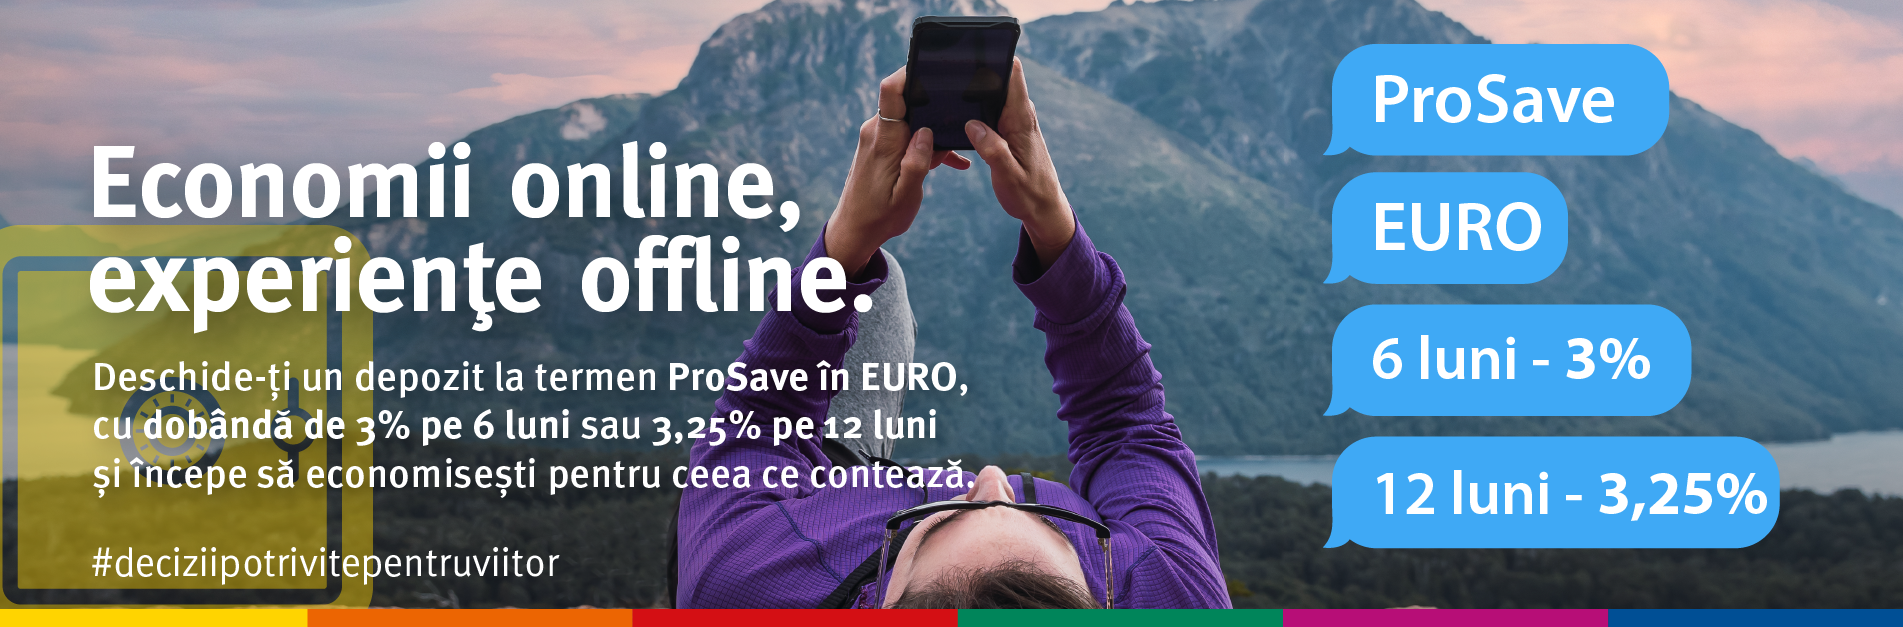 ProSave EURO